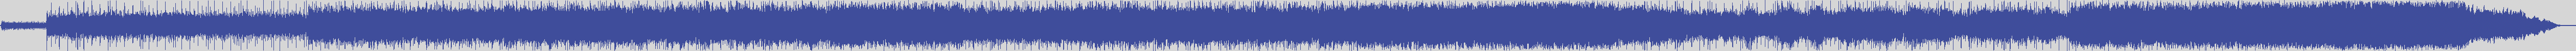 upr [UPR074] Container 47 - Frame Sight [Original Mix] audio wave form